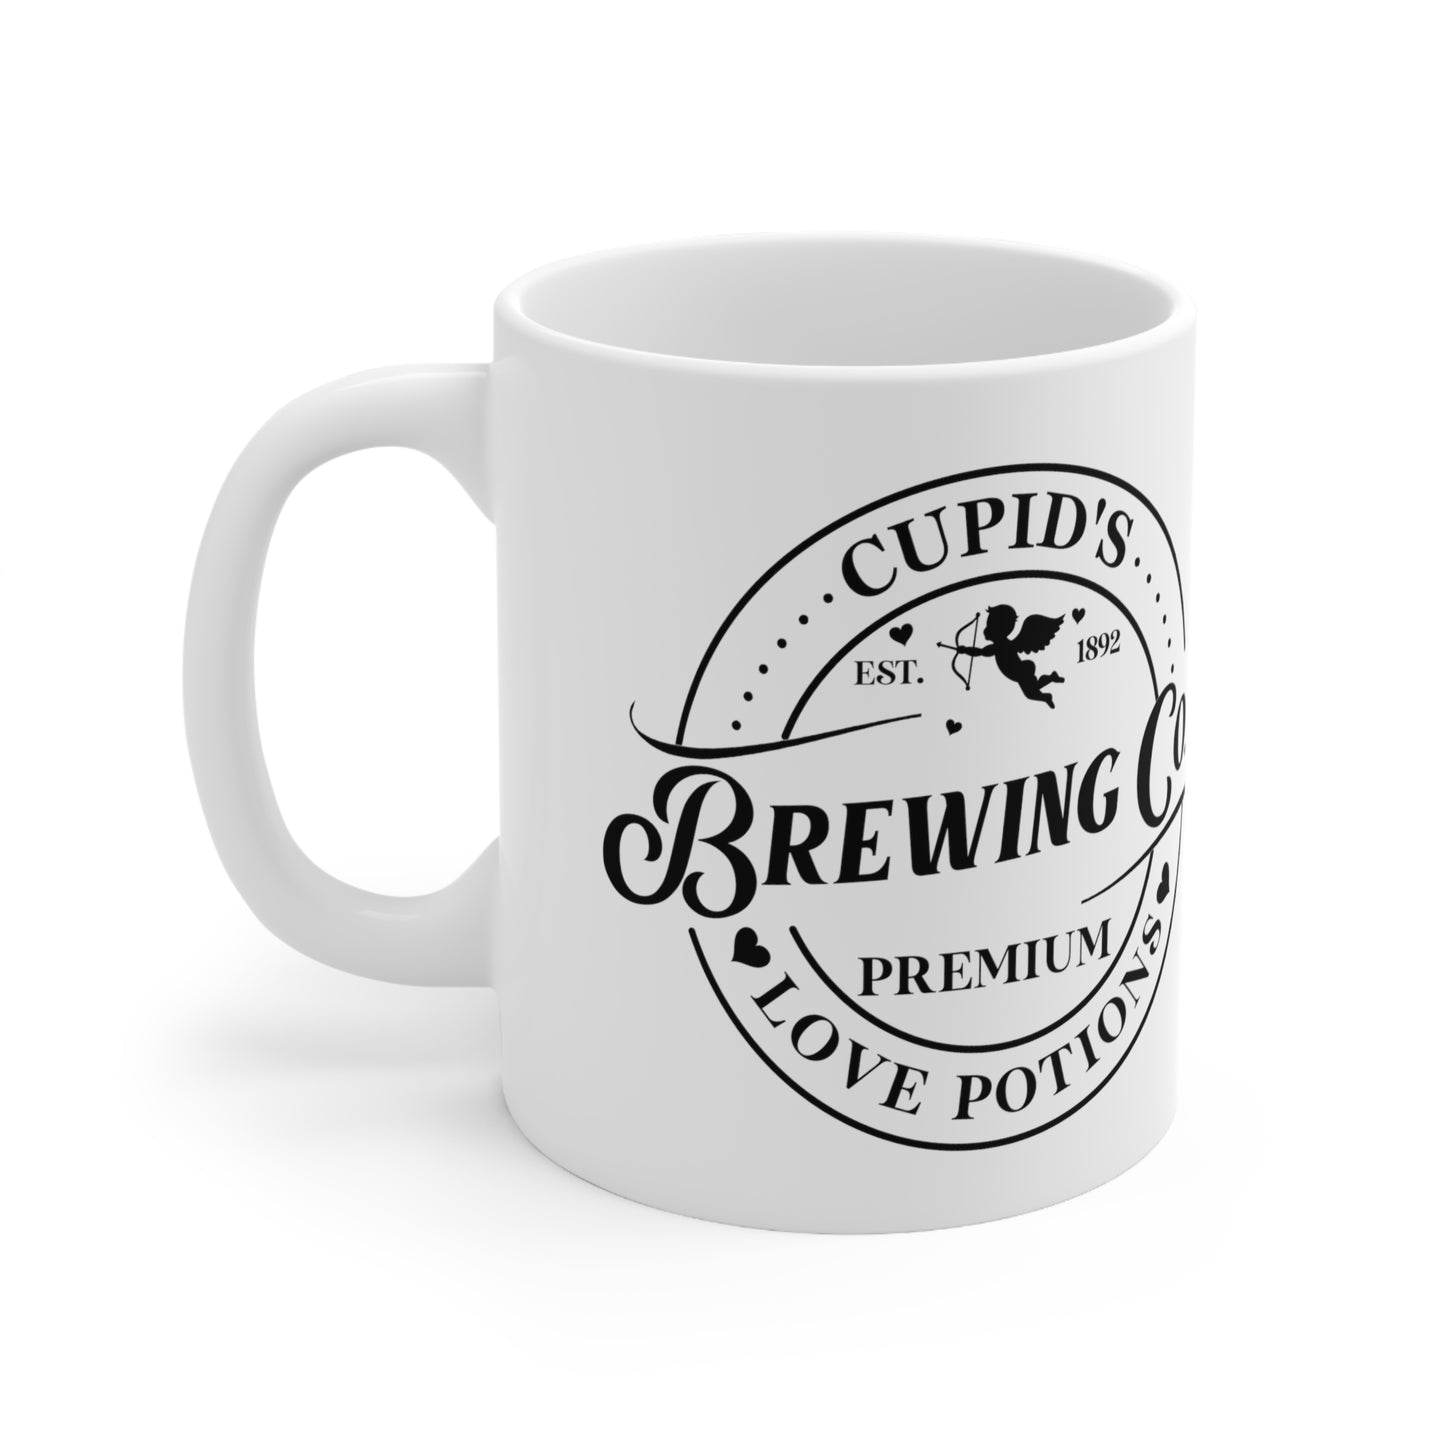 Brewing Co. Cupid's Premium Love Potions Ceramic Mug 11oz